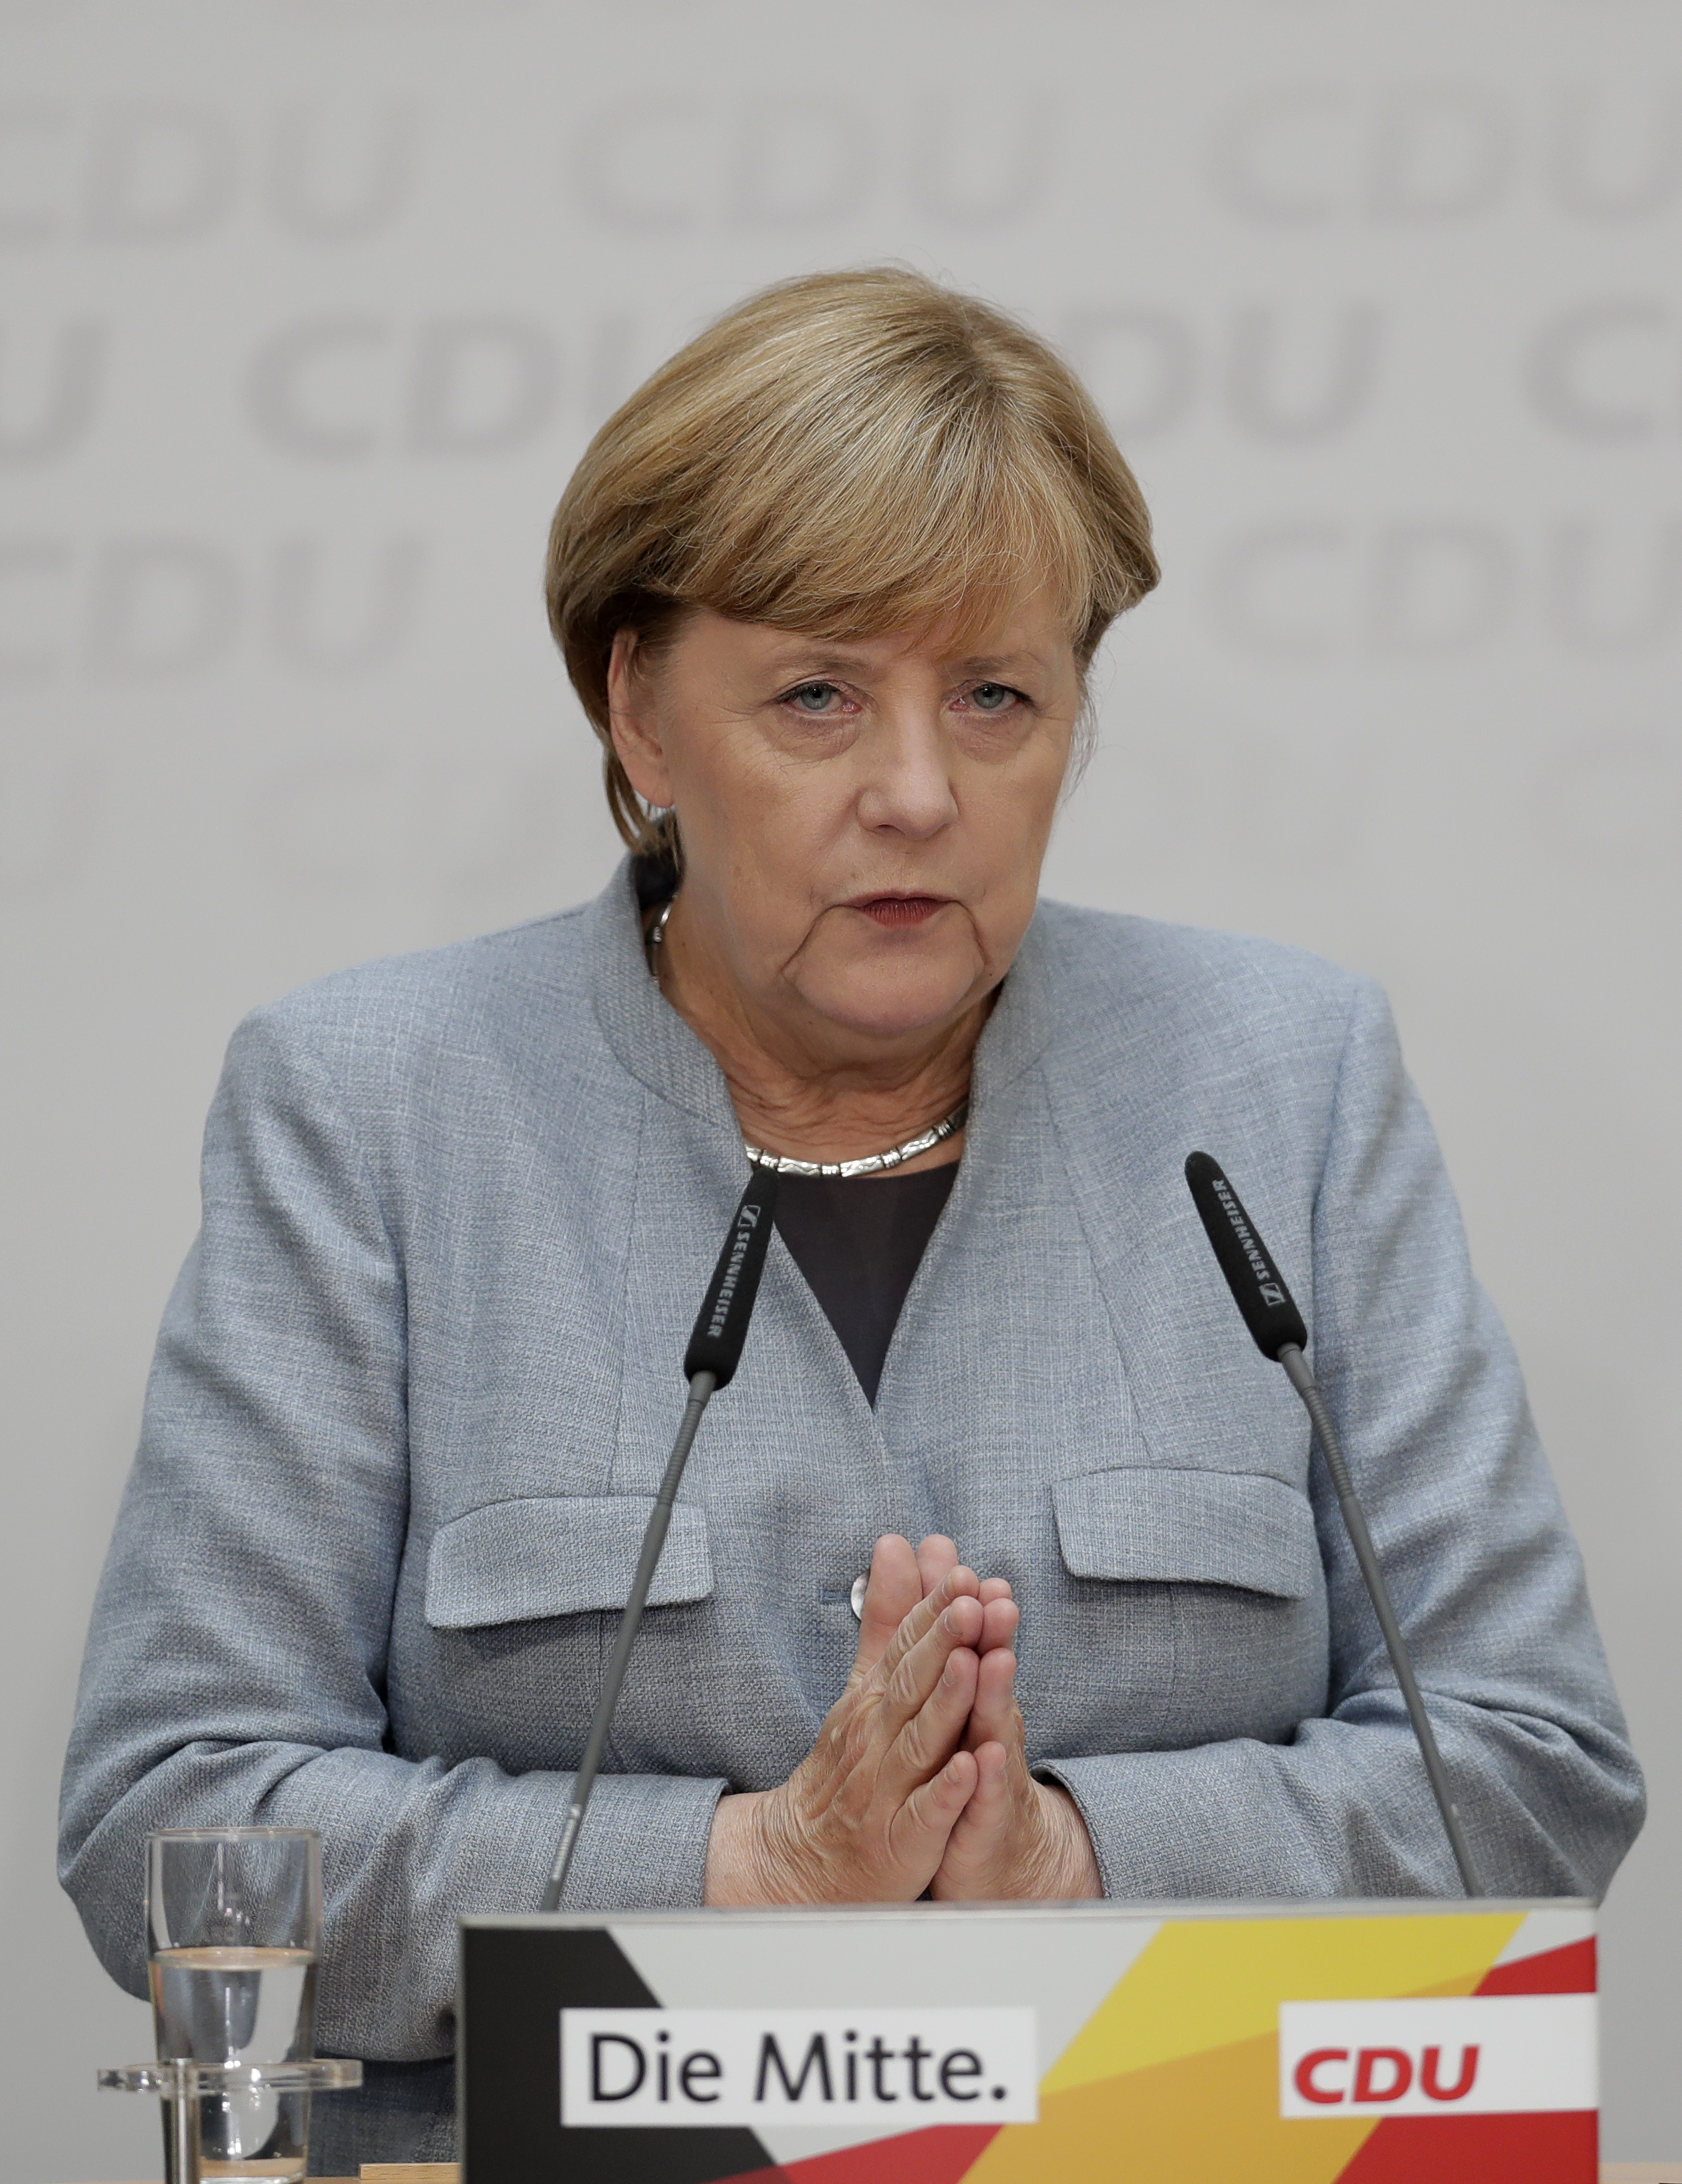 Меркел: Необходима е честна дискусия между Германия и Русия